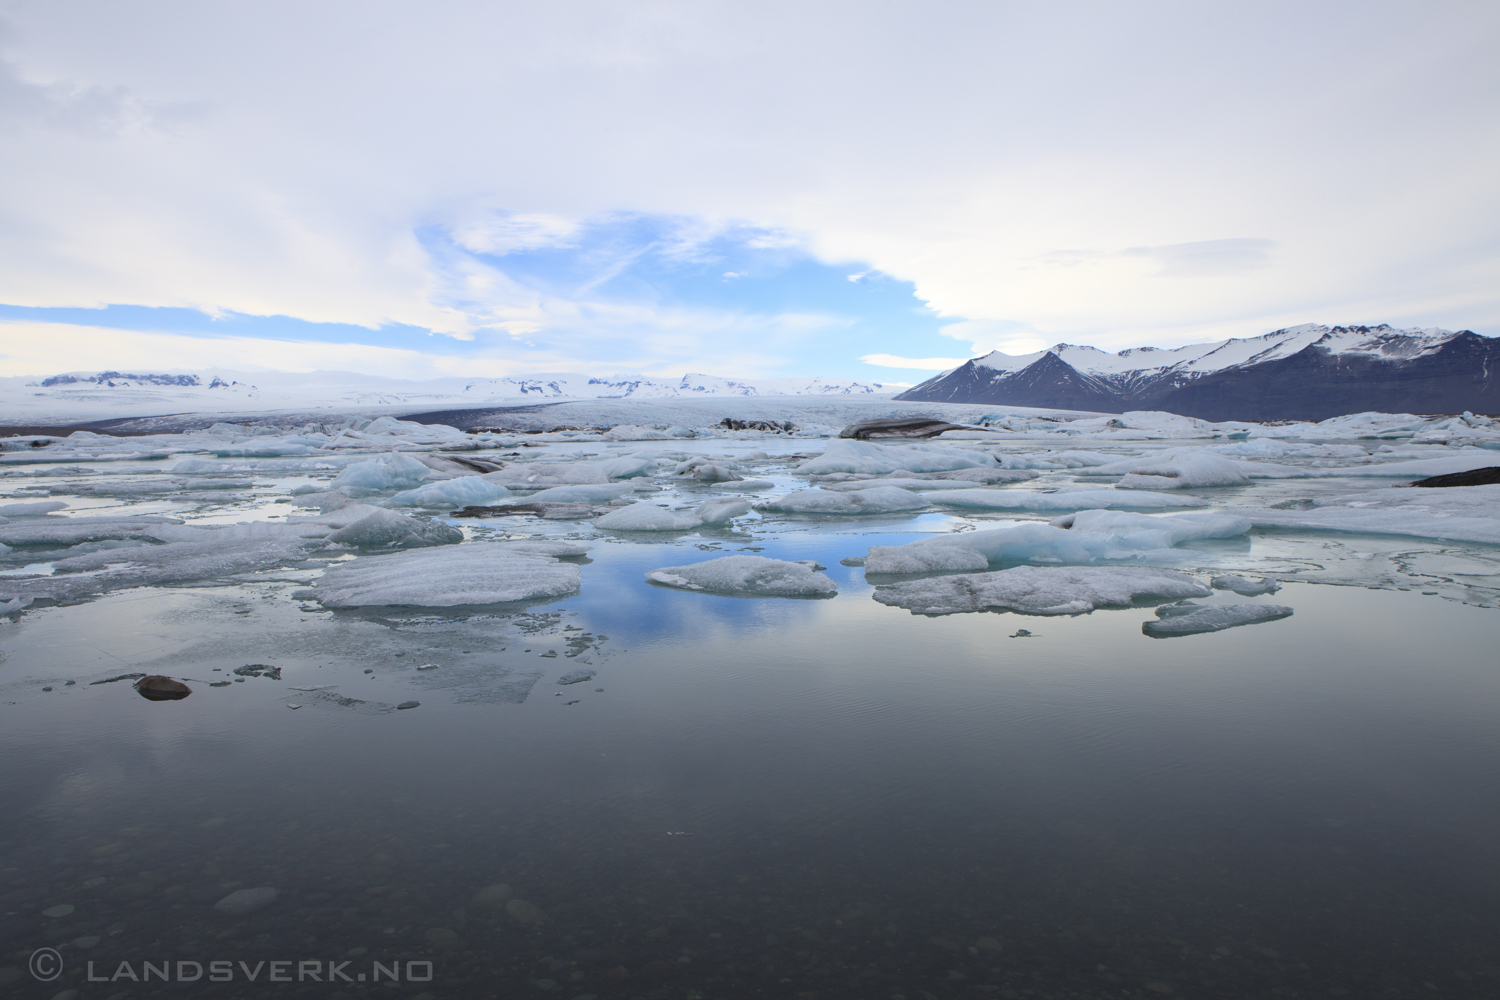 Jökulsárlón glacier lagoon. 

(Canon EOS 5D Mark II / Canon EF 24-70mm f/2.8 L USM)